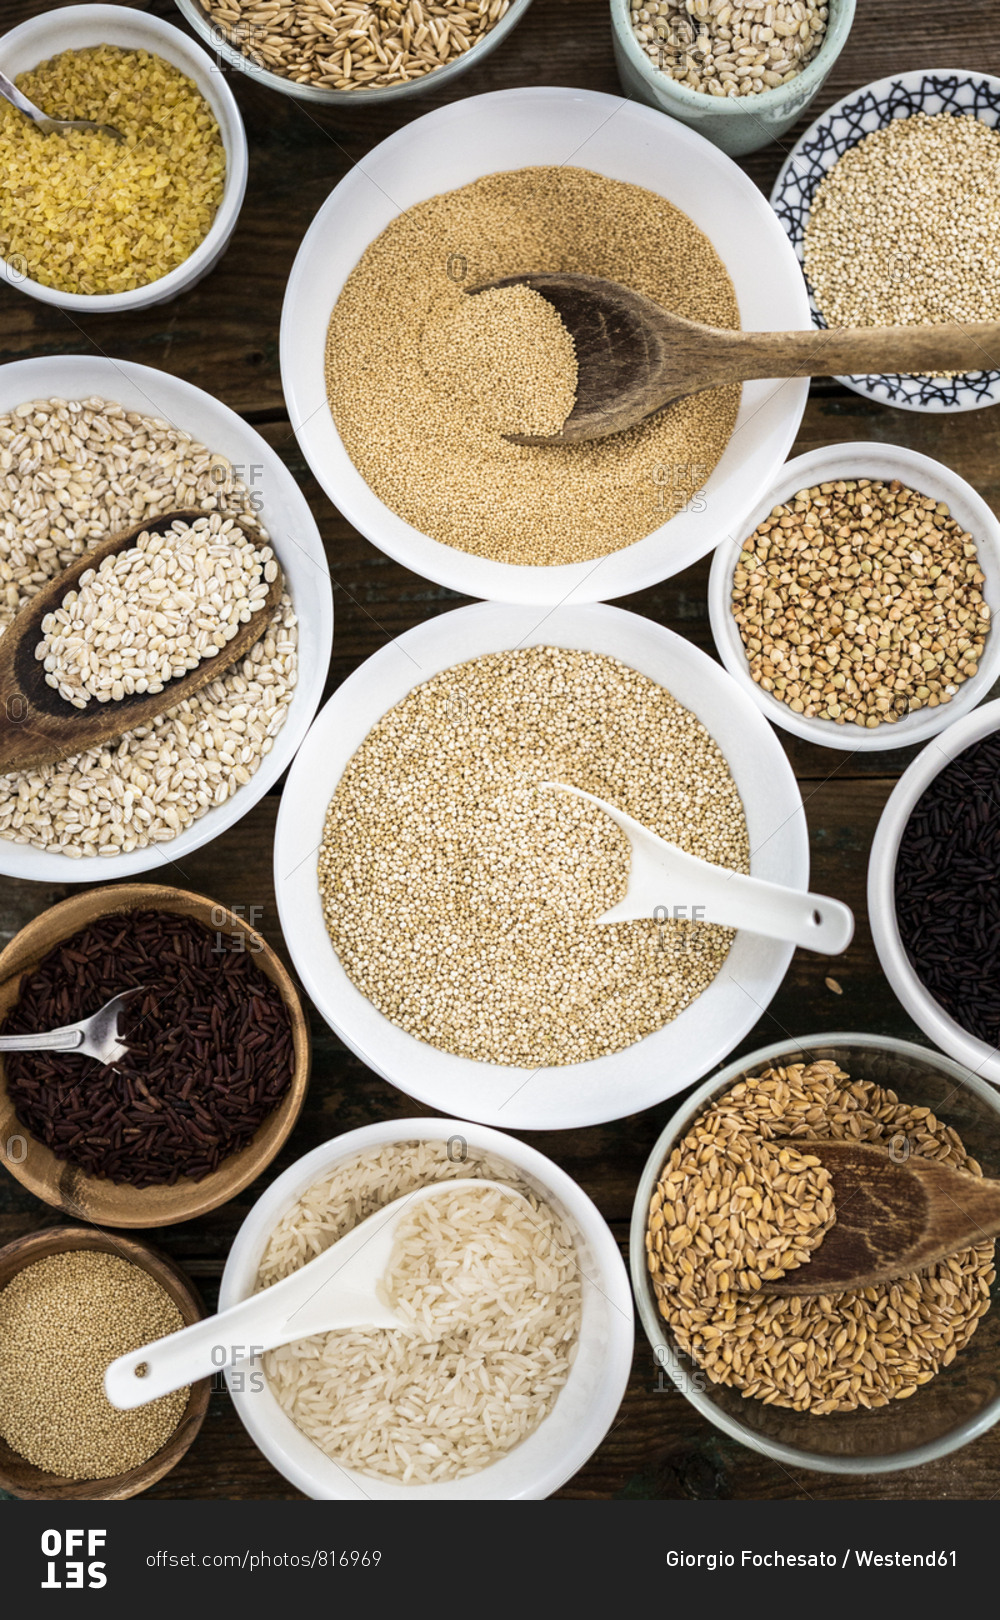 Cereal mix: red rice- black rice- barley- amaranth- quinoa- rice- bulgur- spelt- oats and buckwheat